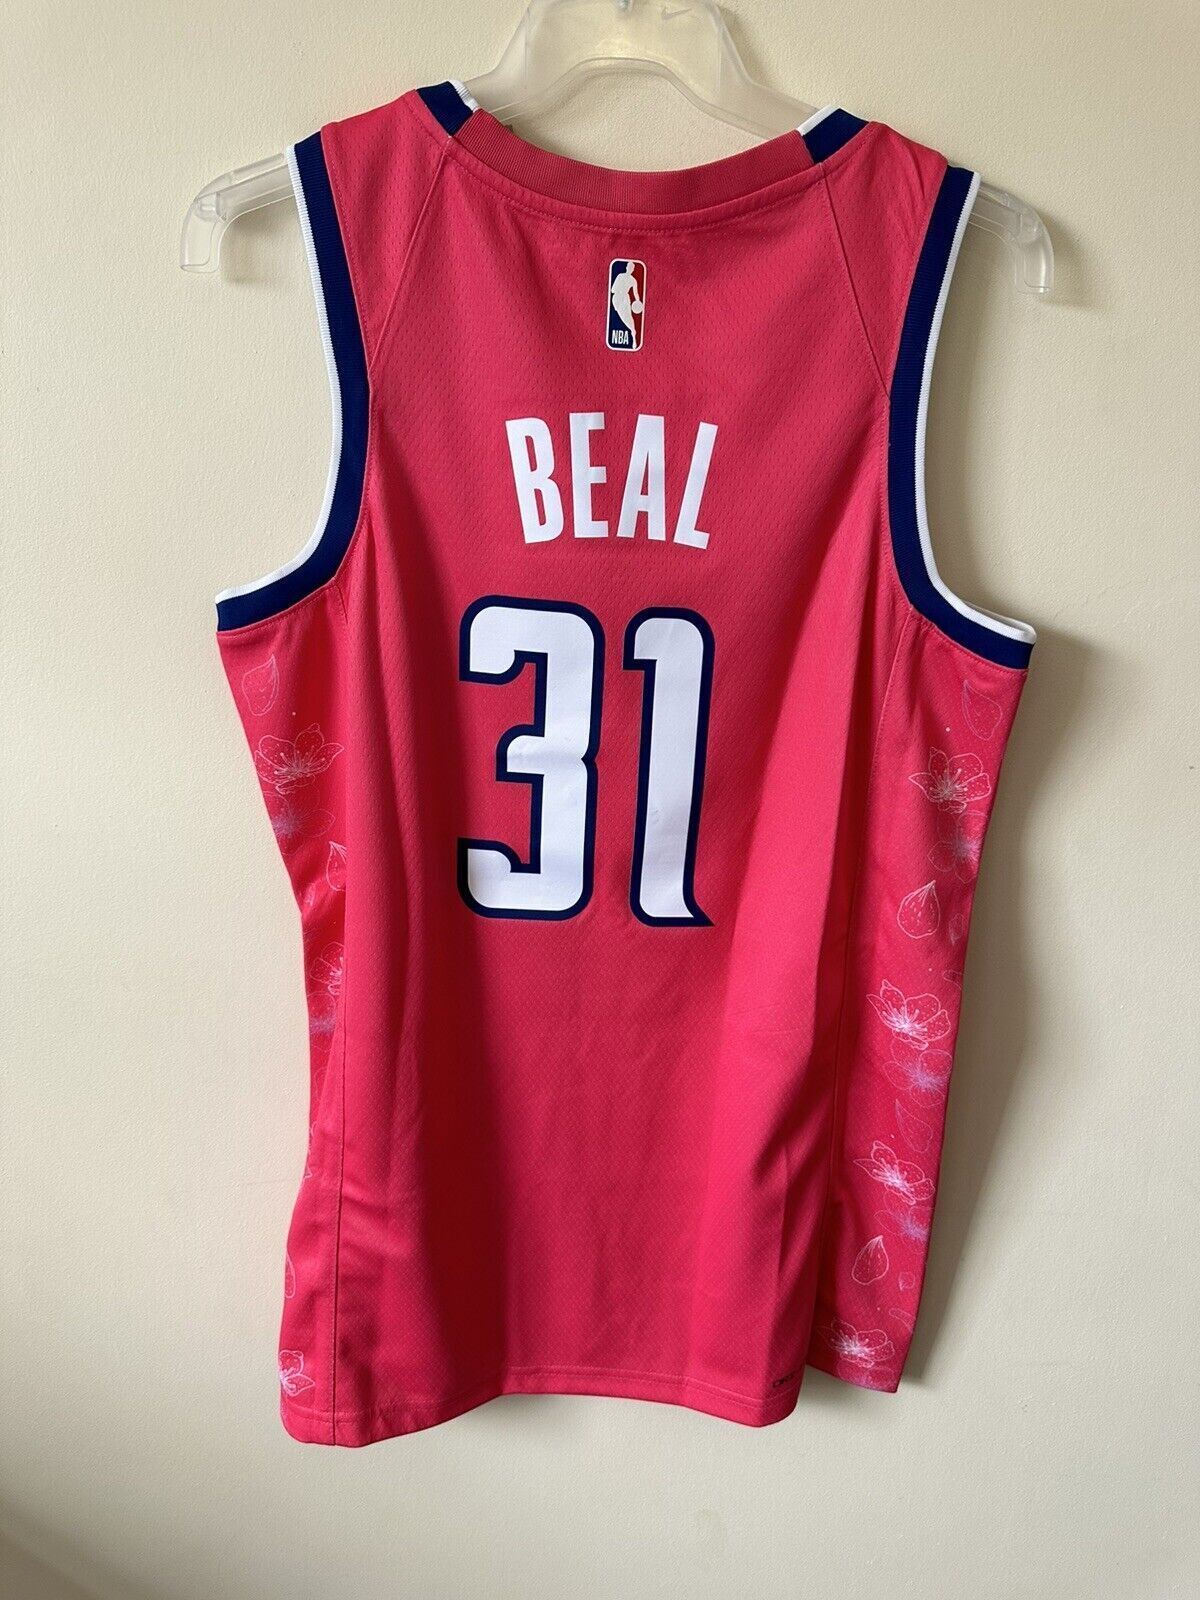 Nike NBA Washington Wizards City Edition Jersey BEAL 31 Basketball Mens Medium